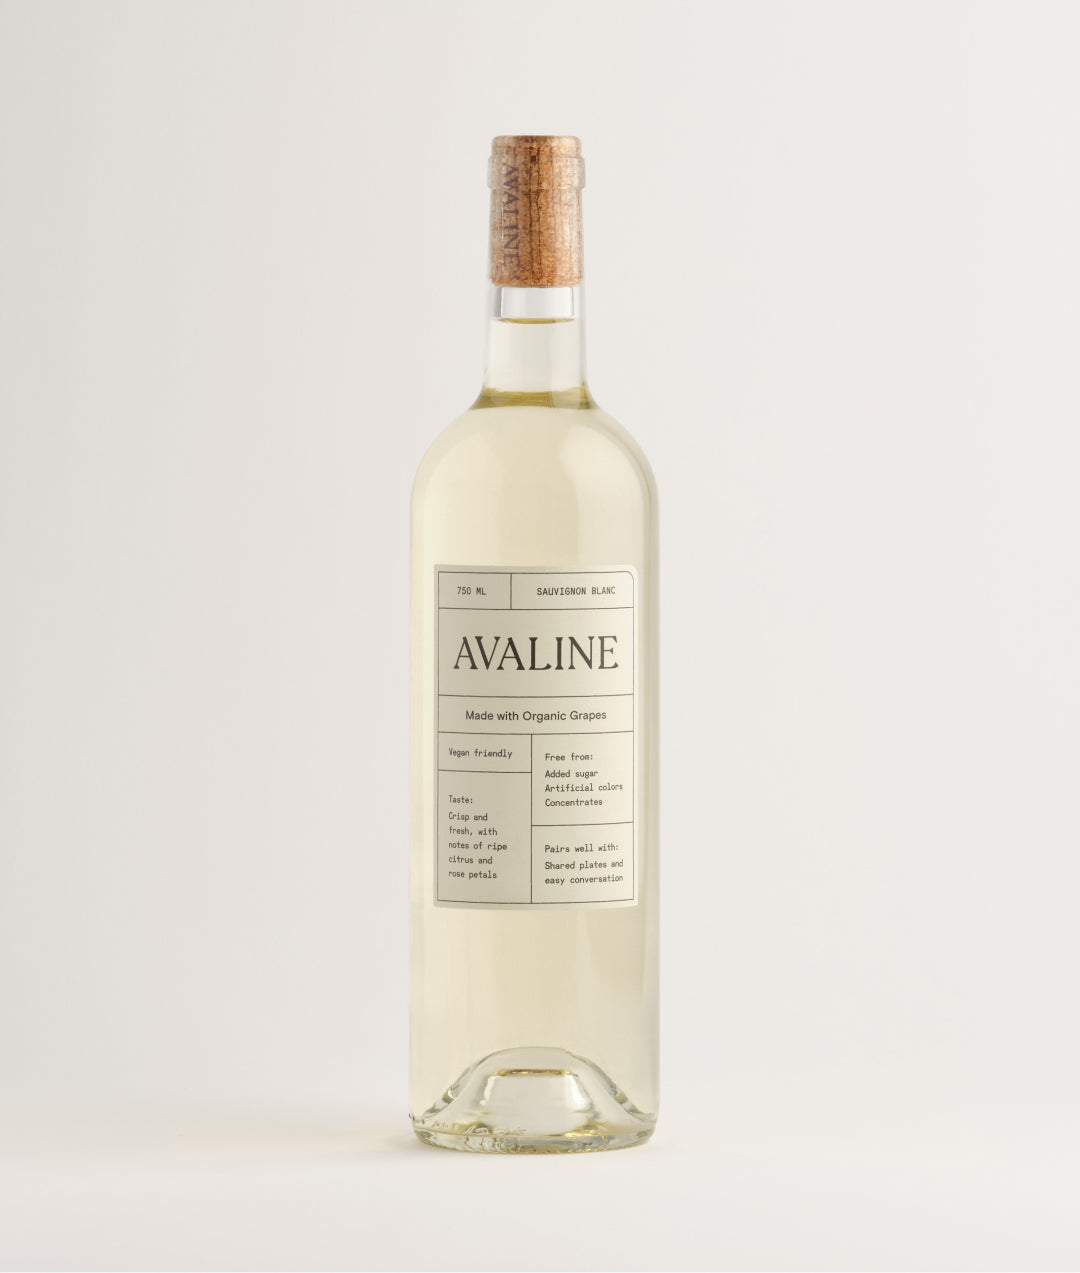 Image of Avaline Sauvignon Blanc bottle